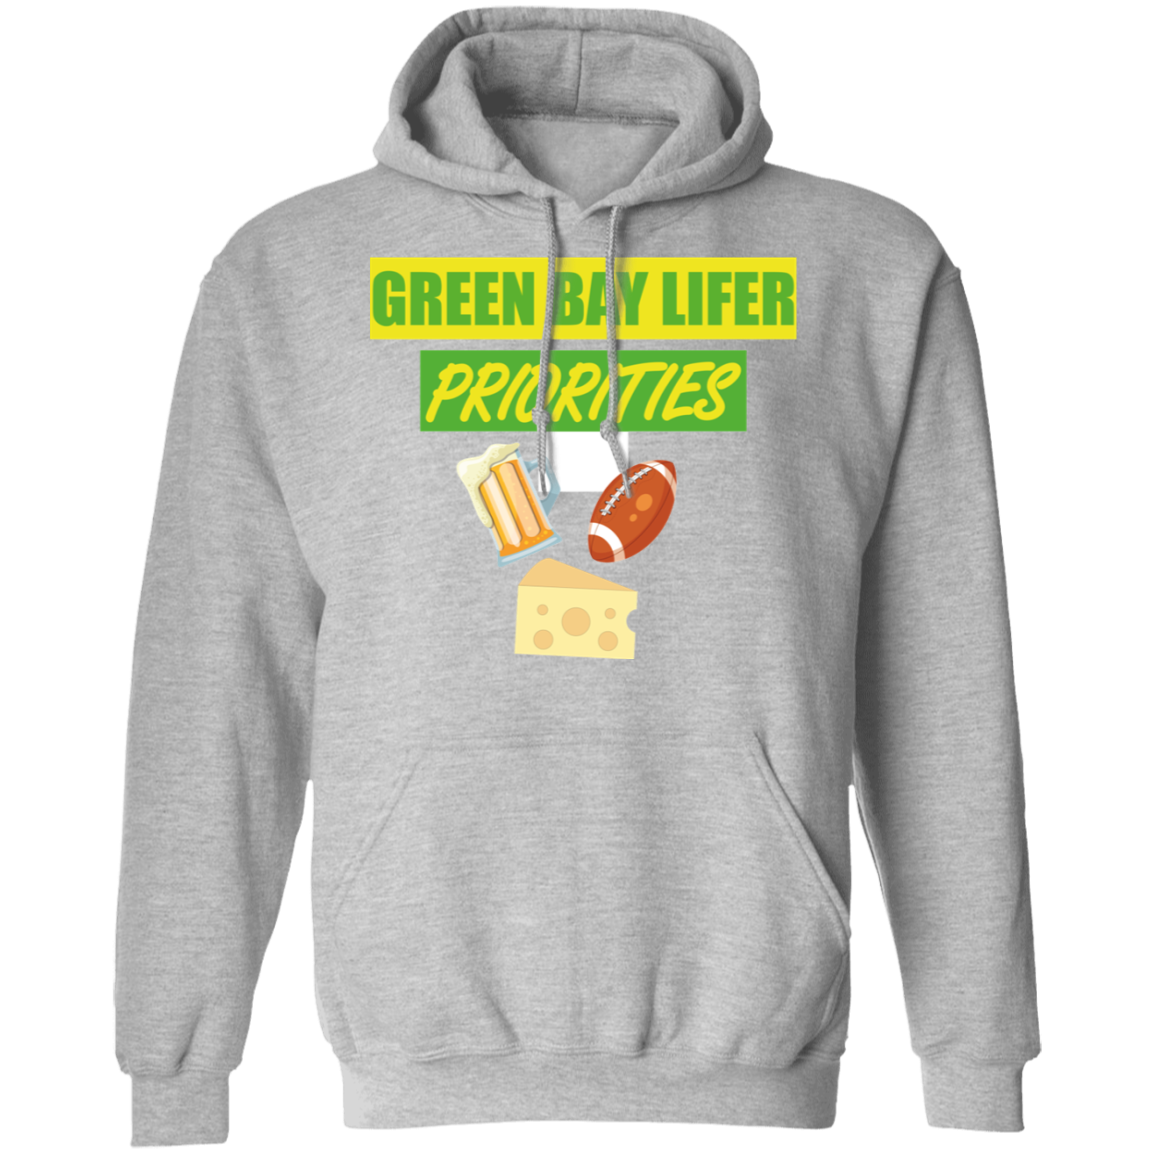 Green Bay Lifer Pullover Hoodie